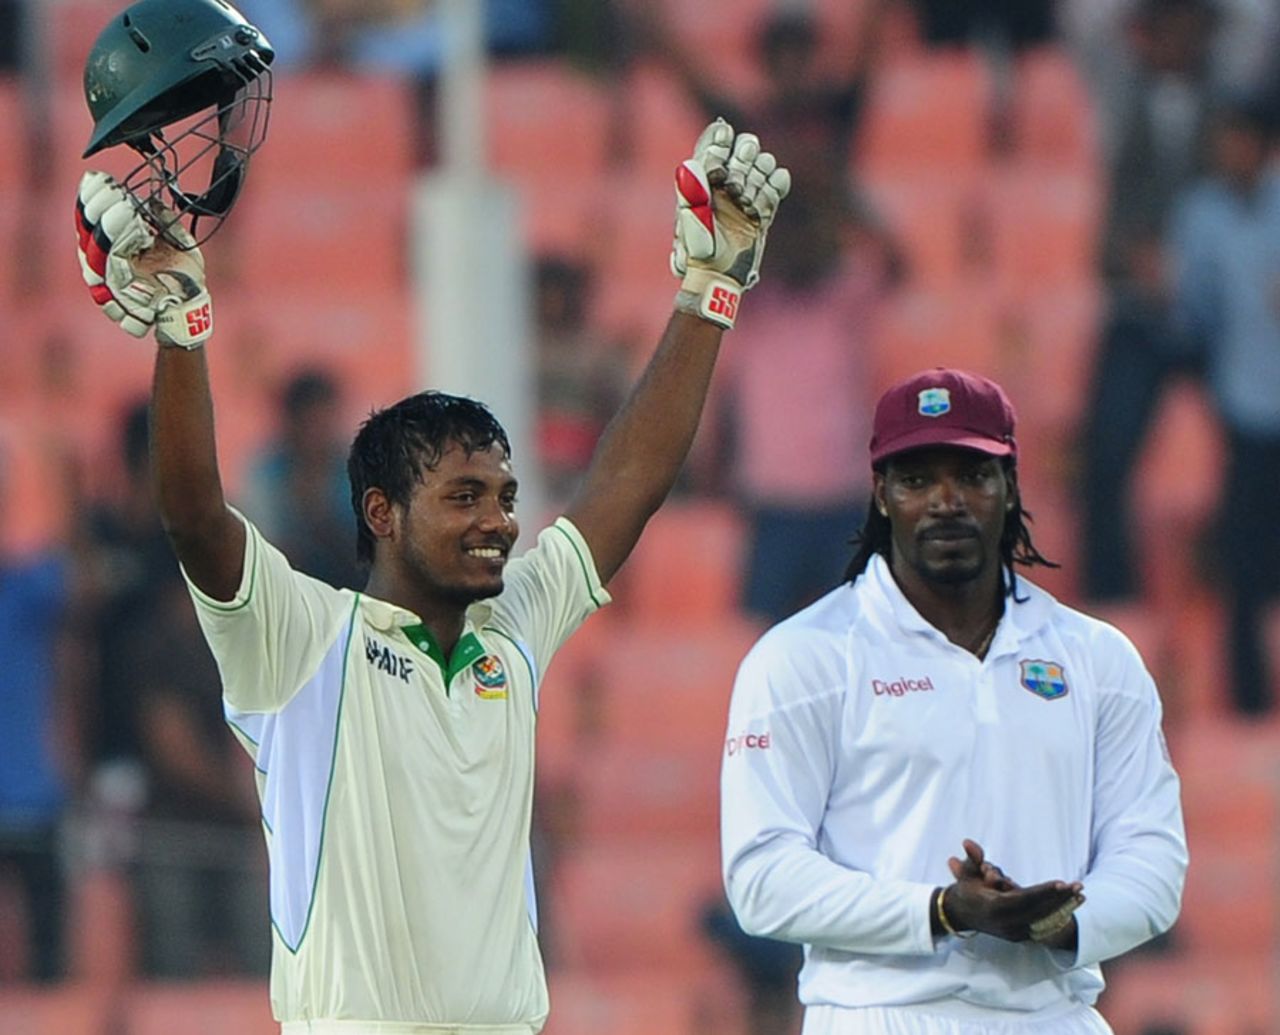 Chris Gayle applauds Abul Hasan's debut hundred, Bangladesh v West Indies, 2nd Test, Khulna, 1st day, November 21, 2012